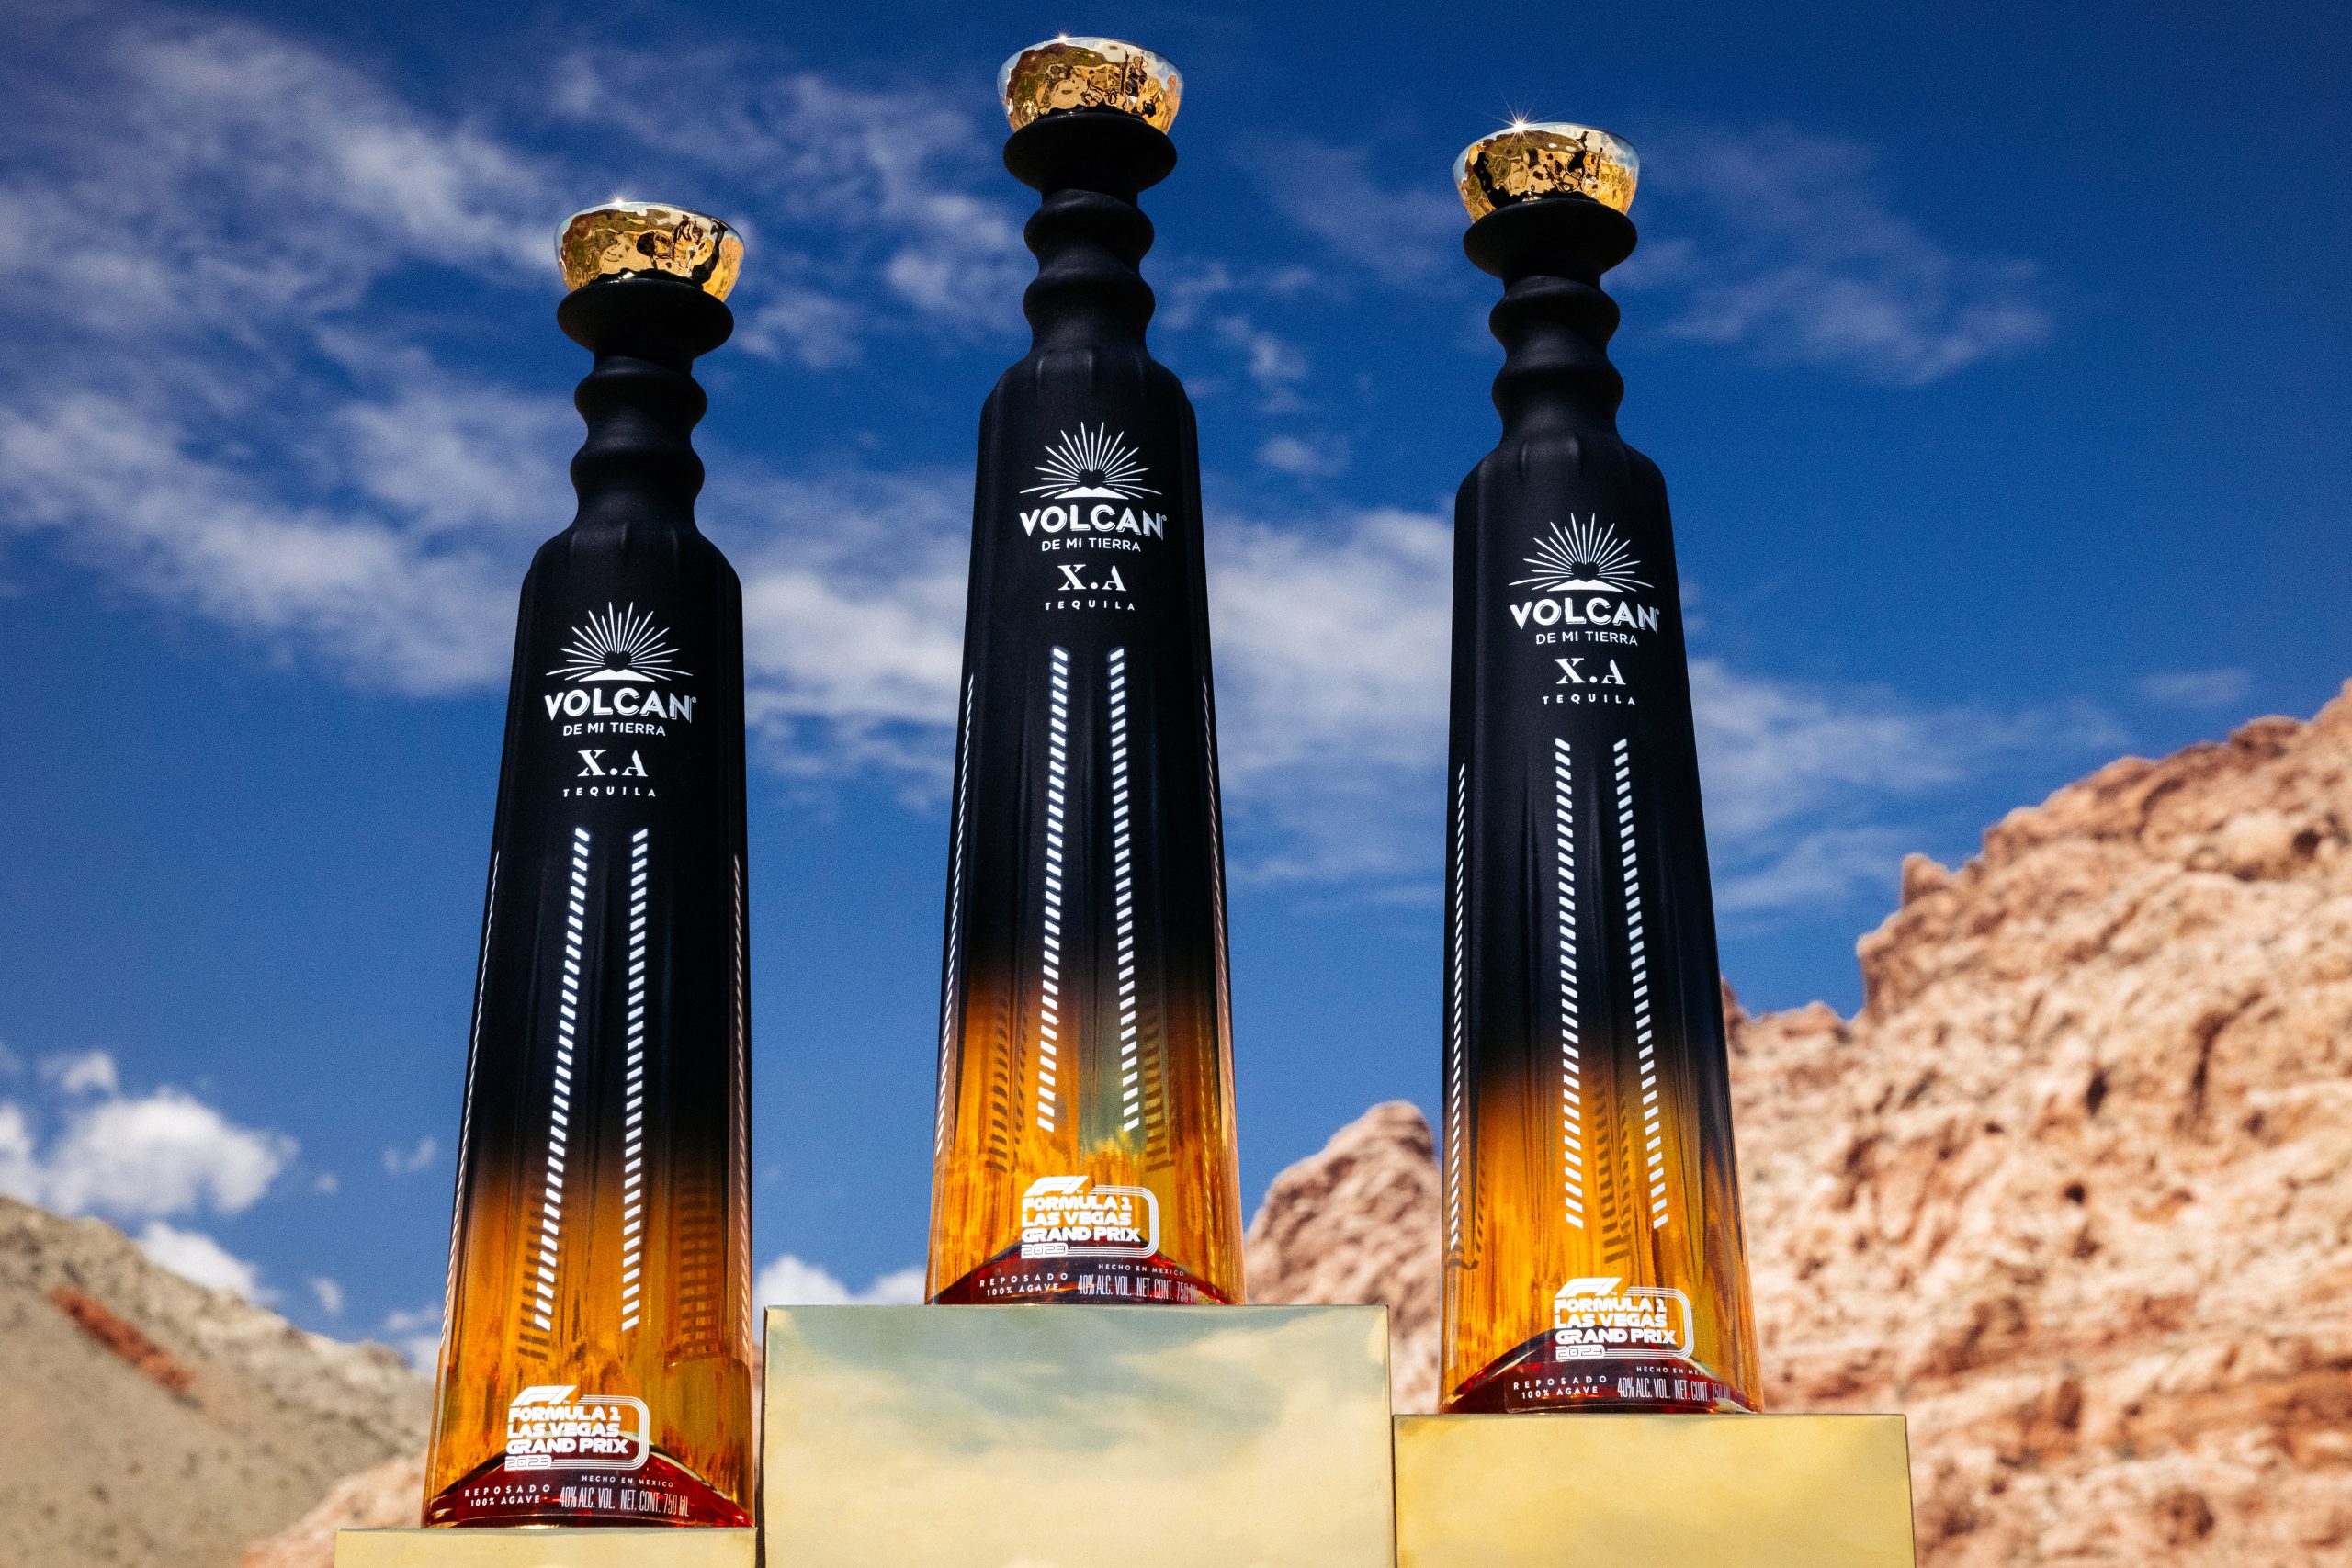 Volcán de Mi Tierra’s Ultra-Premium Volcan X.A Becomes Formula 1’s Official Tequila for the Las Vegas Grand Prix